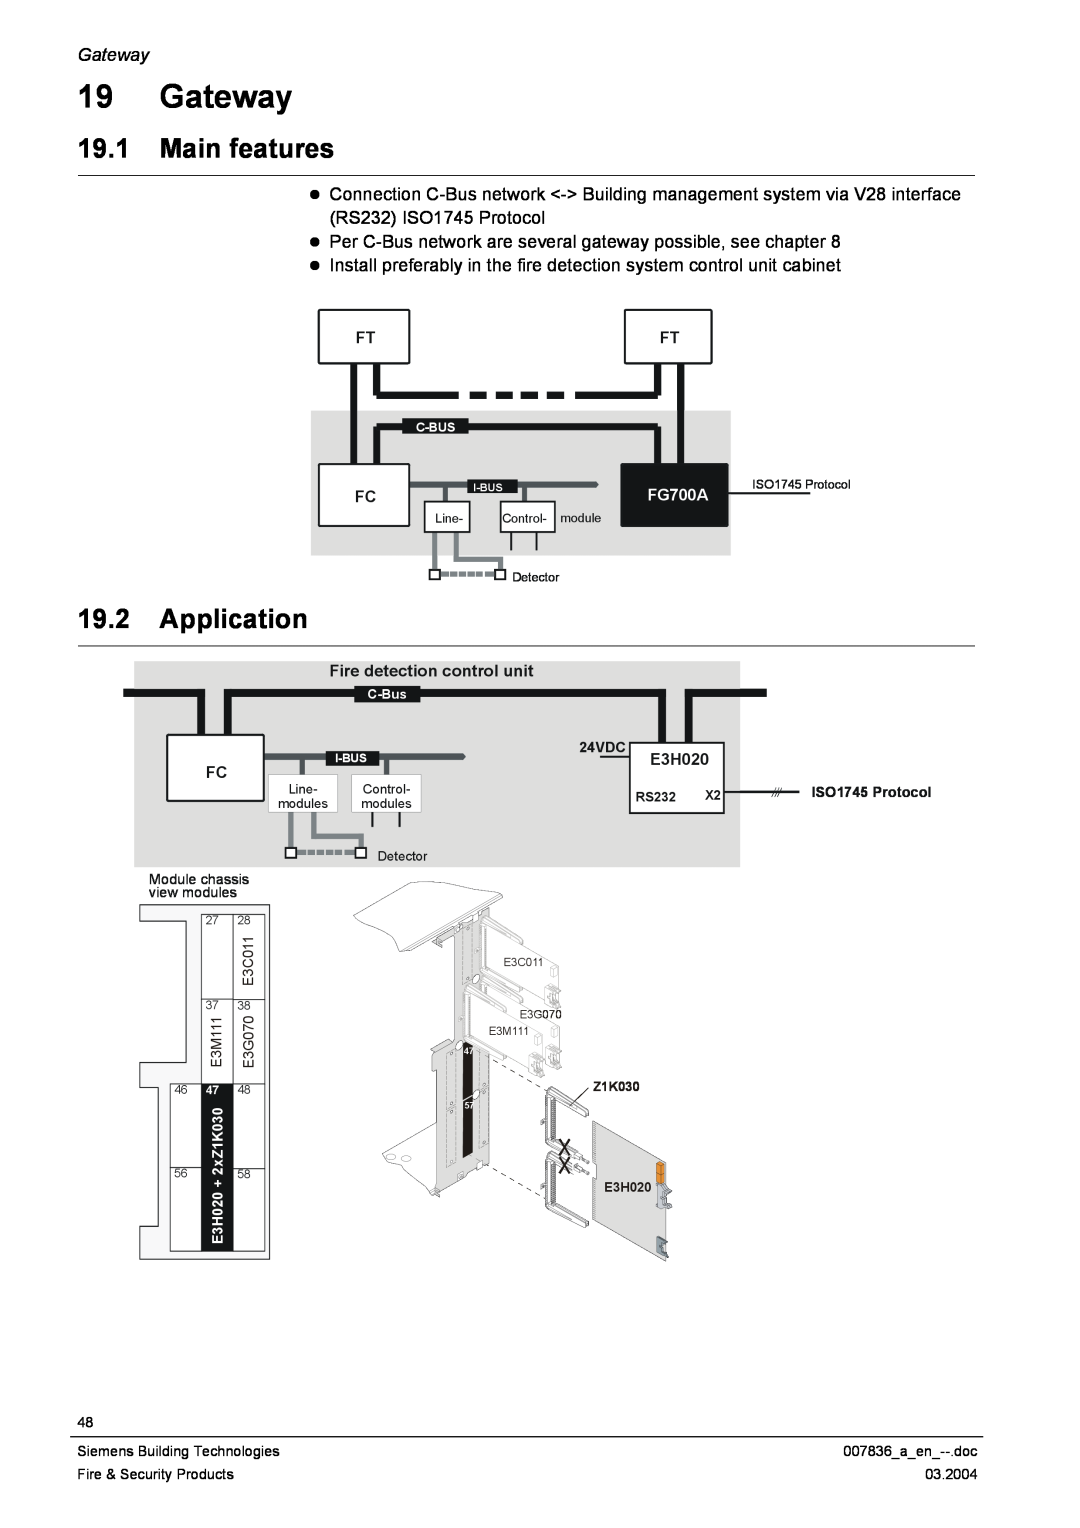 Siemens FC700A manual Gateway, 19.1Main features, 19.2Application 